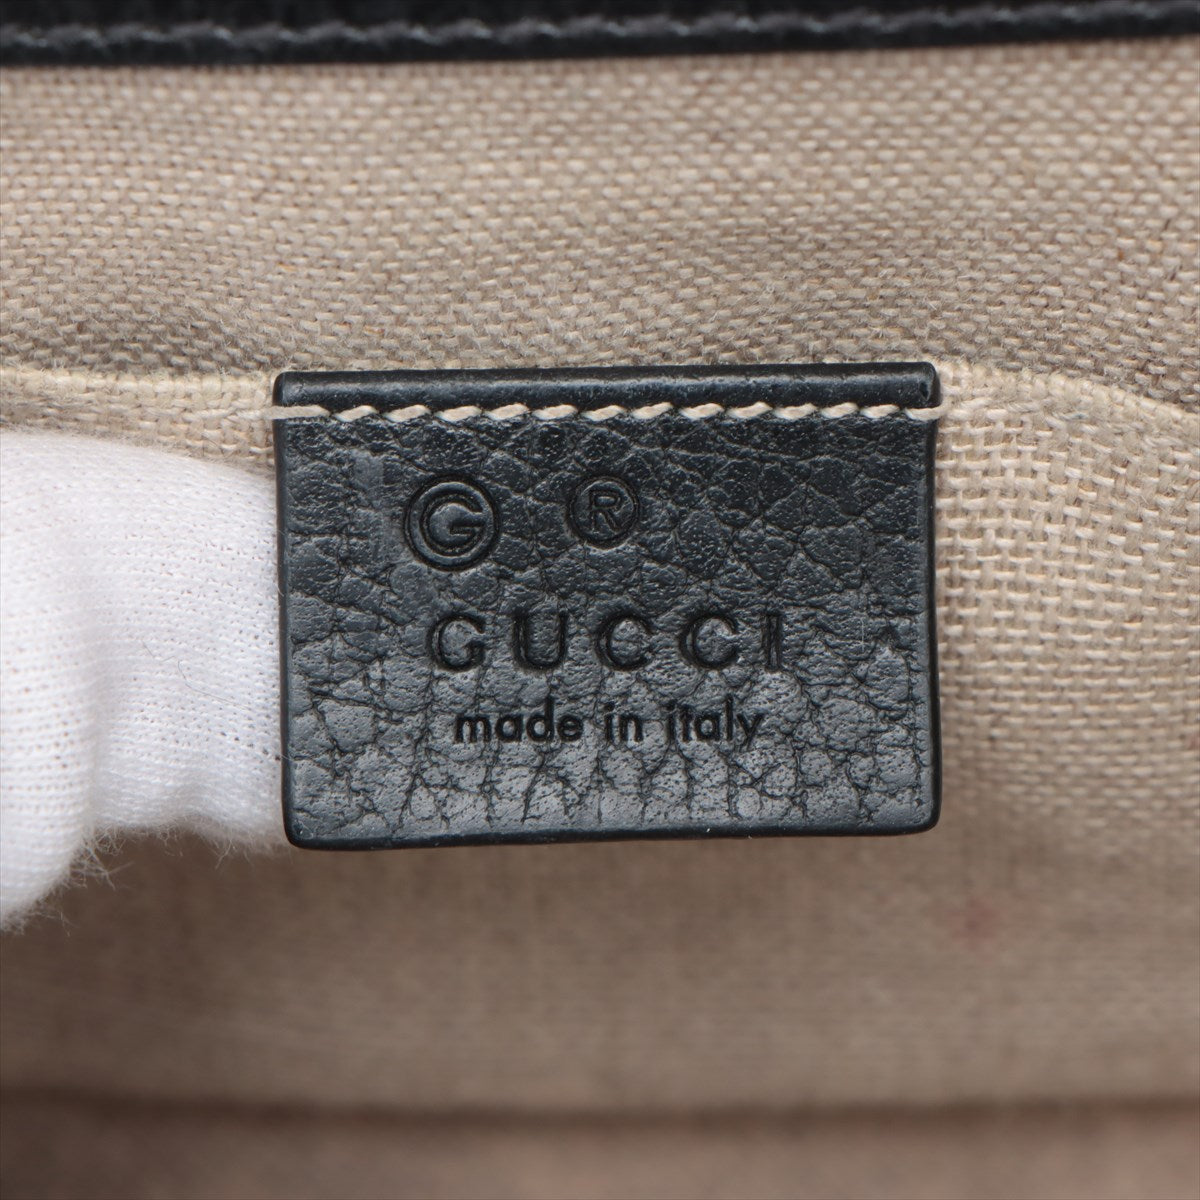 Gucci Interlocg G Leather Chain Shoulder Bag Black 510304